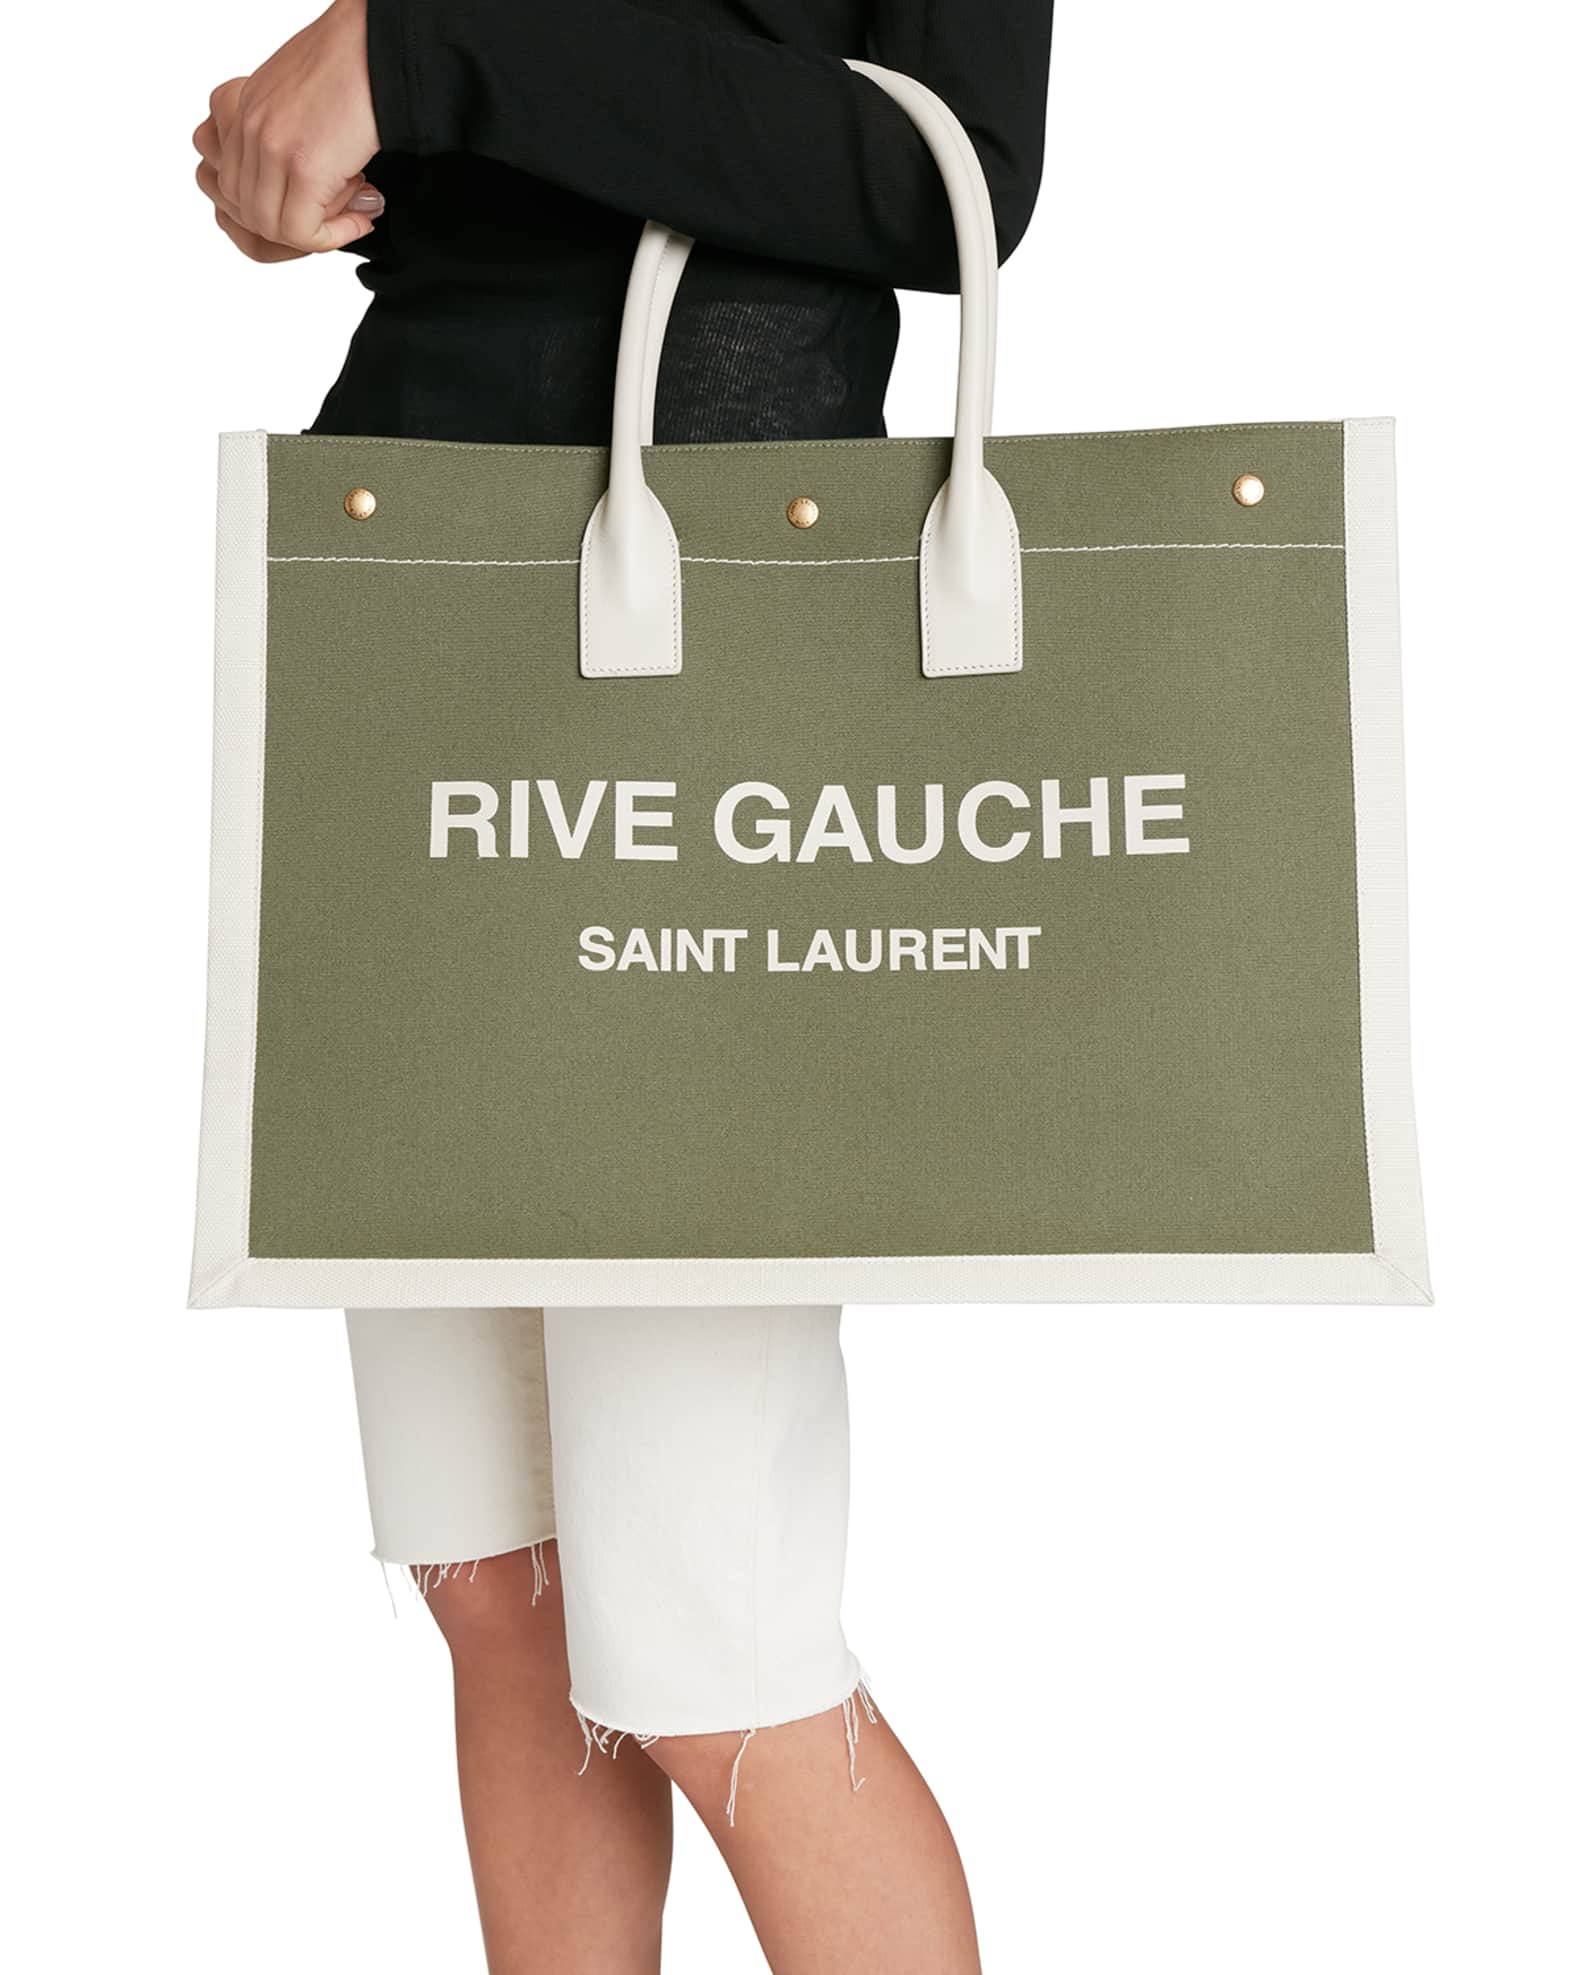 Saint Laurent Rive Gauche Tote Bag in Green